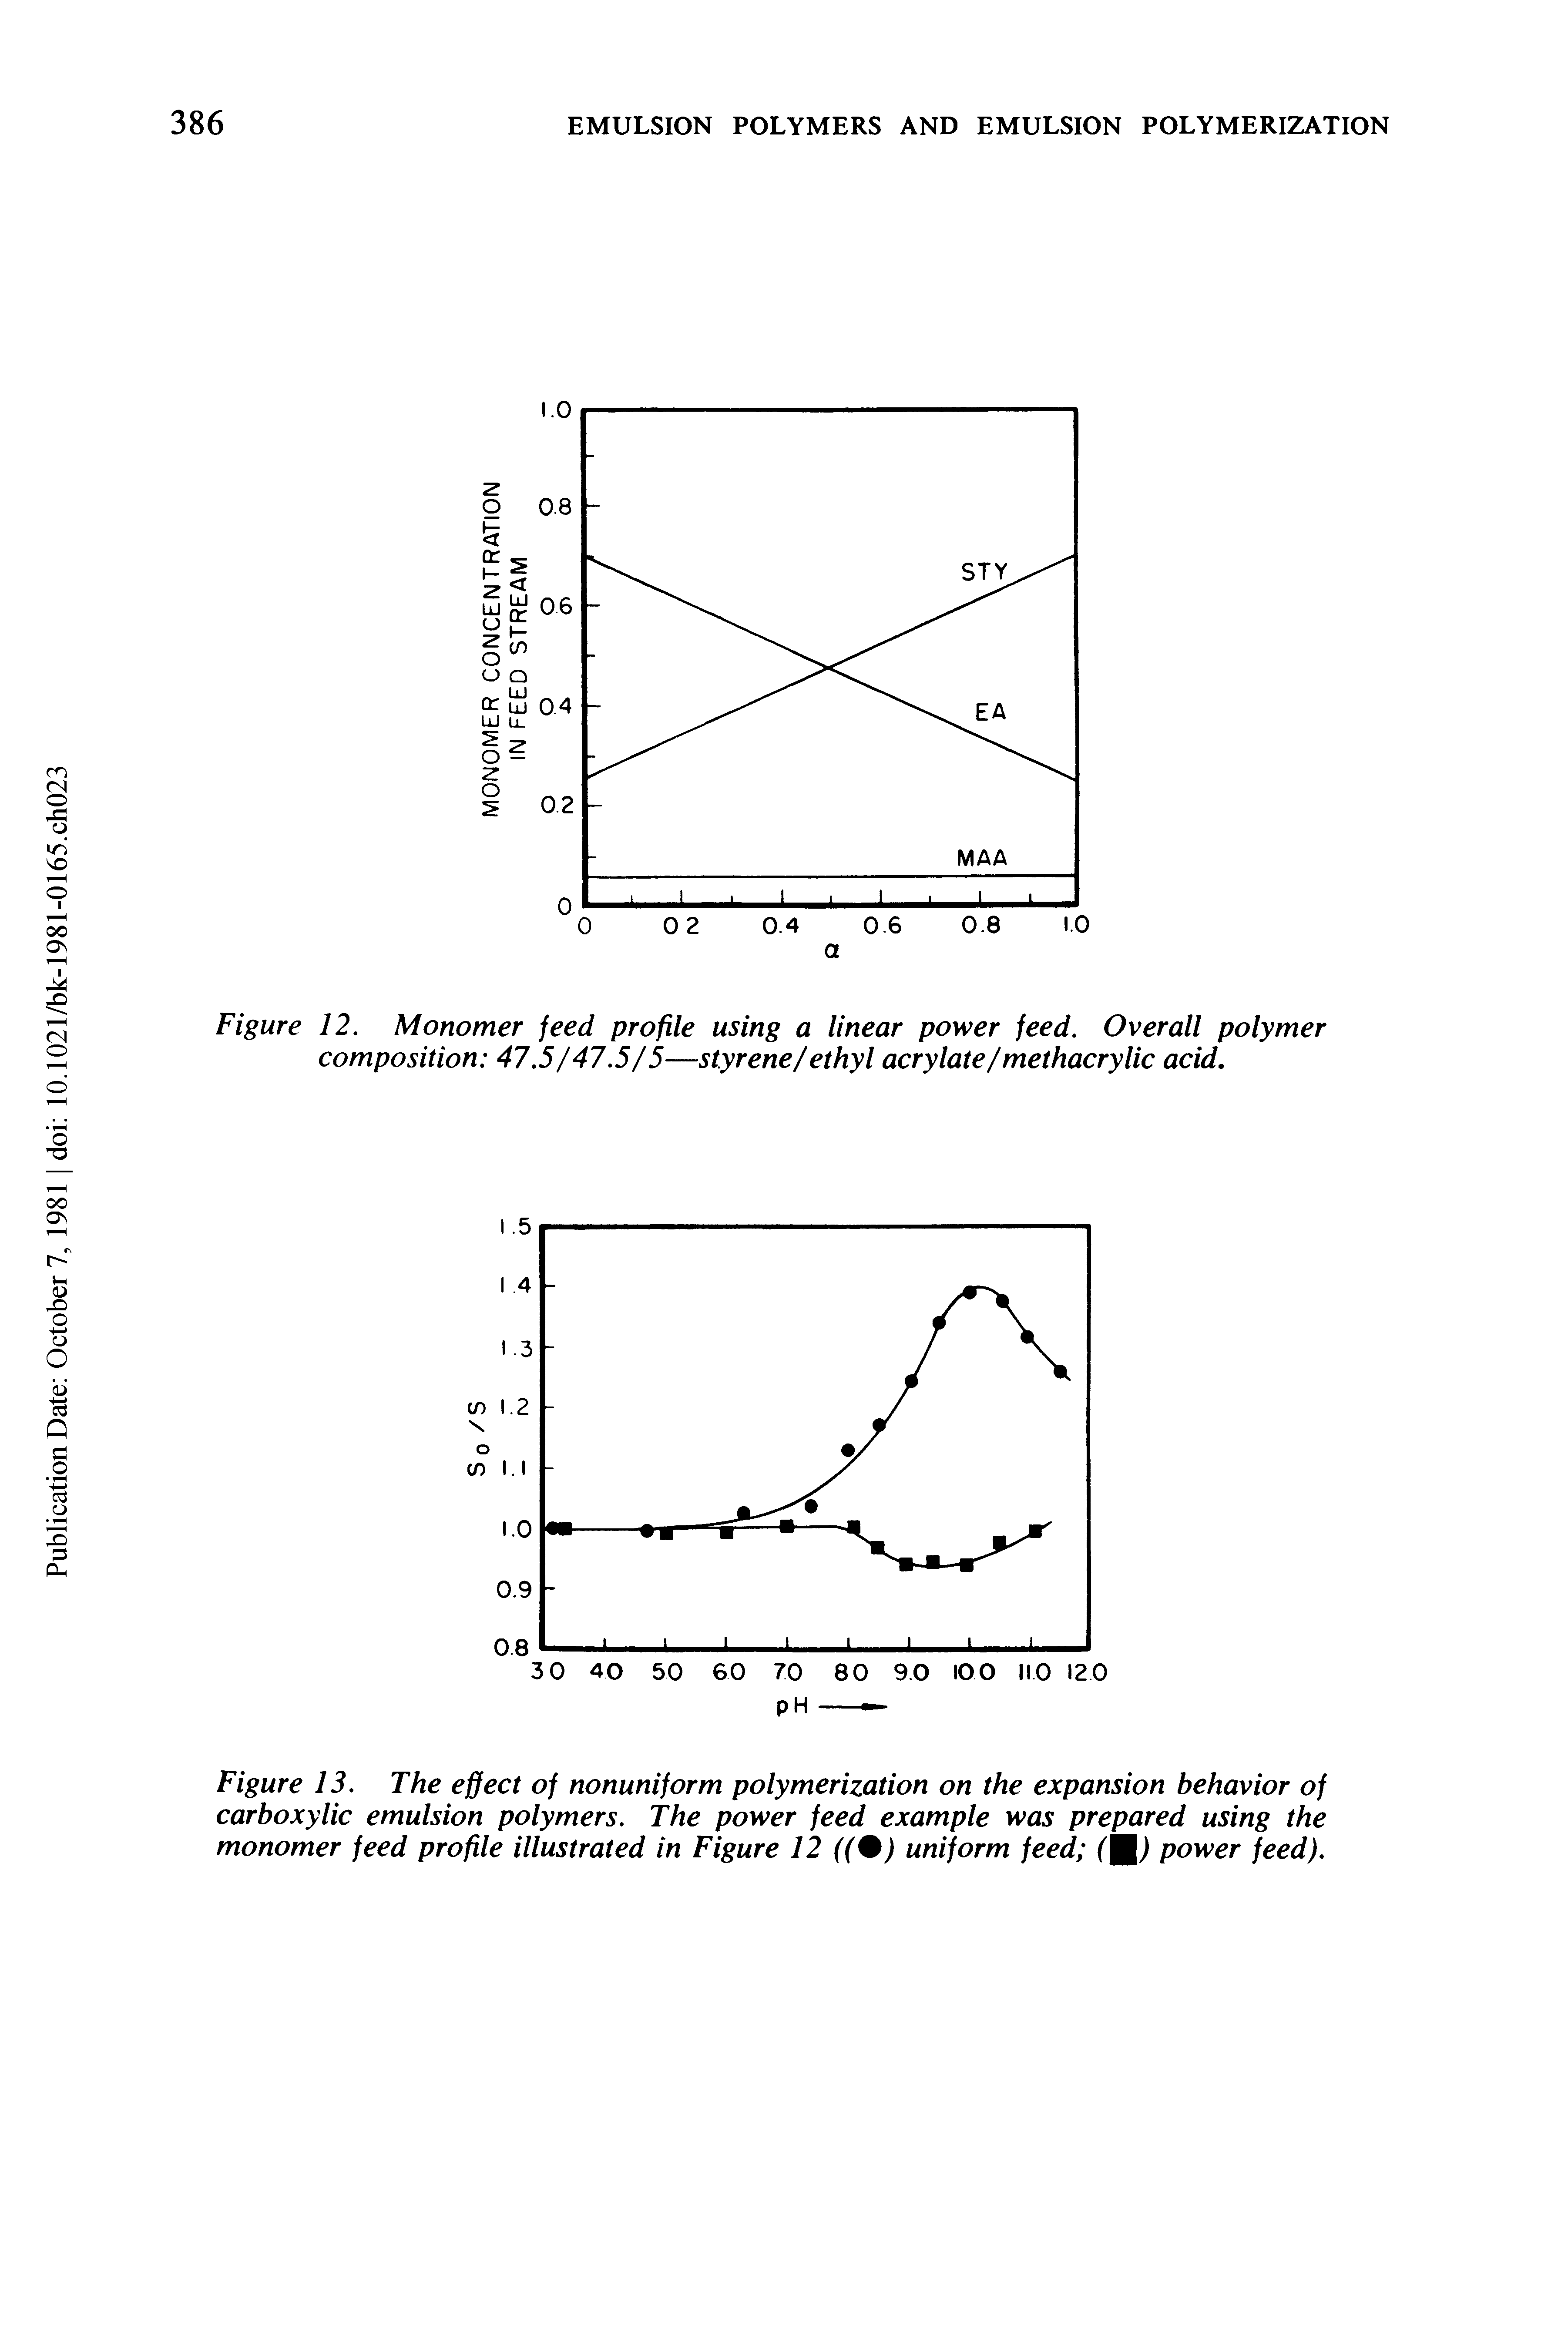 Figure 12. Monomer feed profile using a linear power feed. Overall polymer composition 47.5/47.5/5—styrene/ethyl acrylate/methacrylic acid.